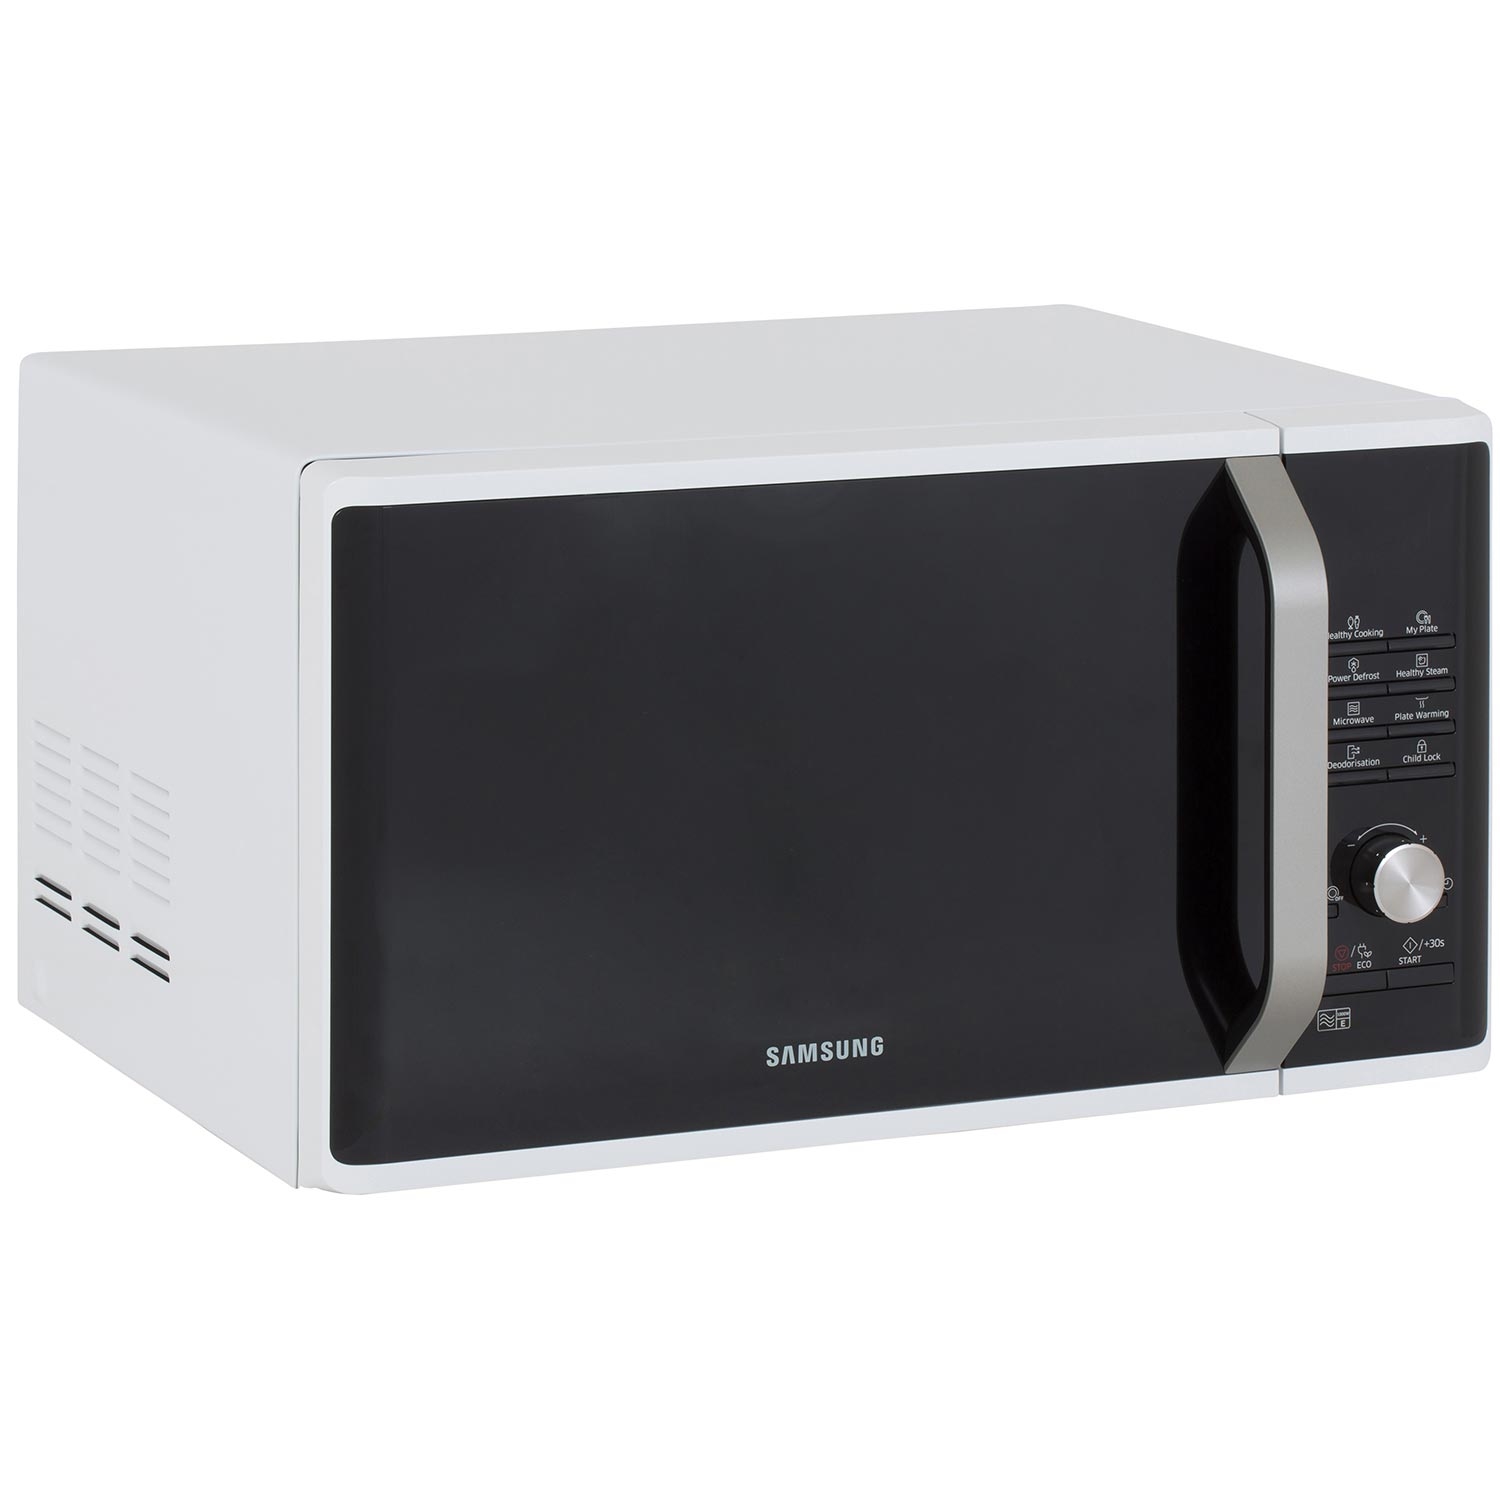 Samsung 28 Litre Microwave - White - 2